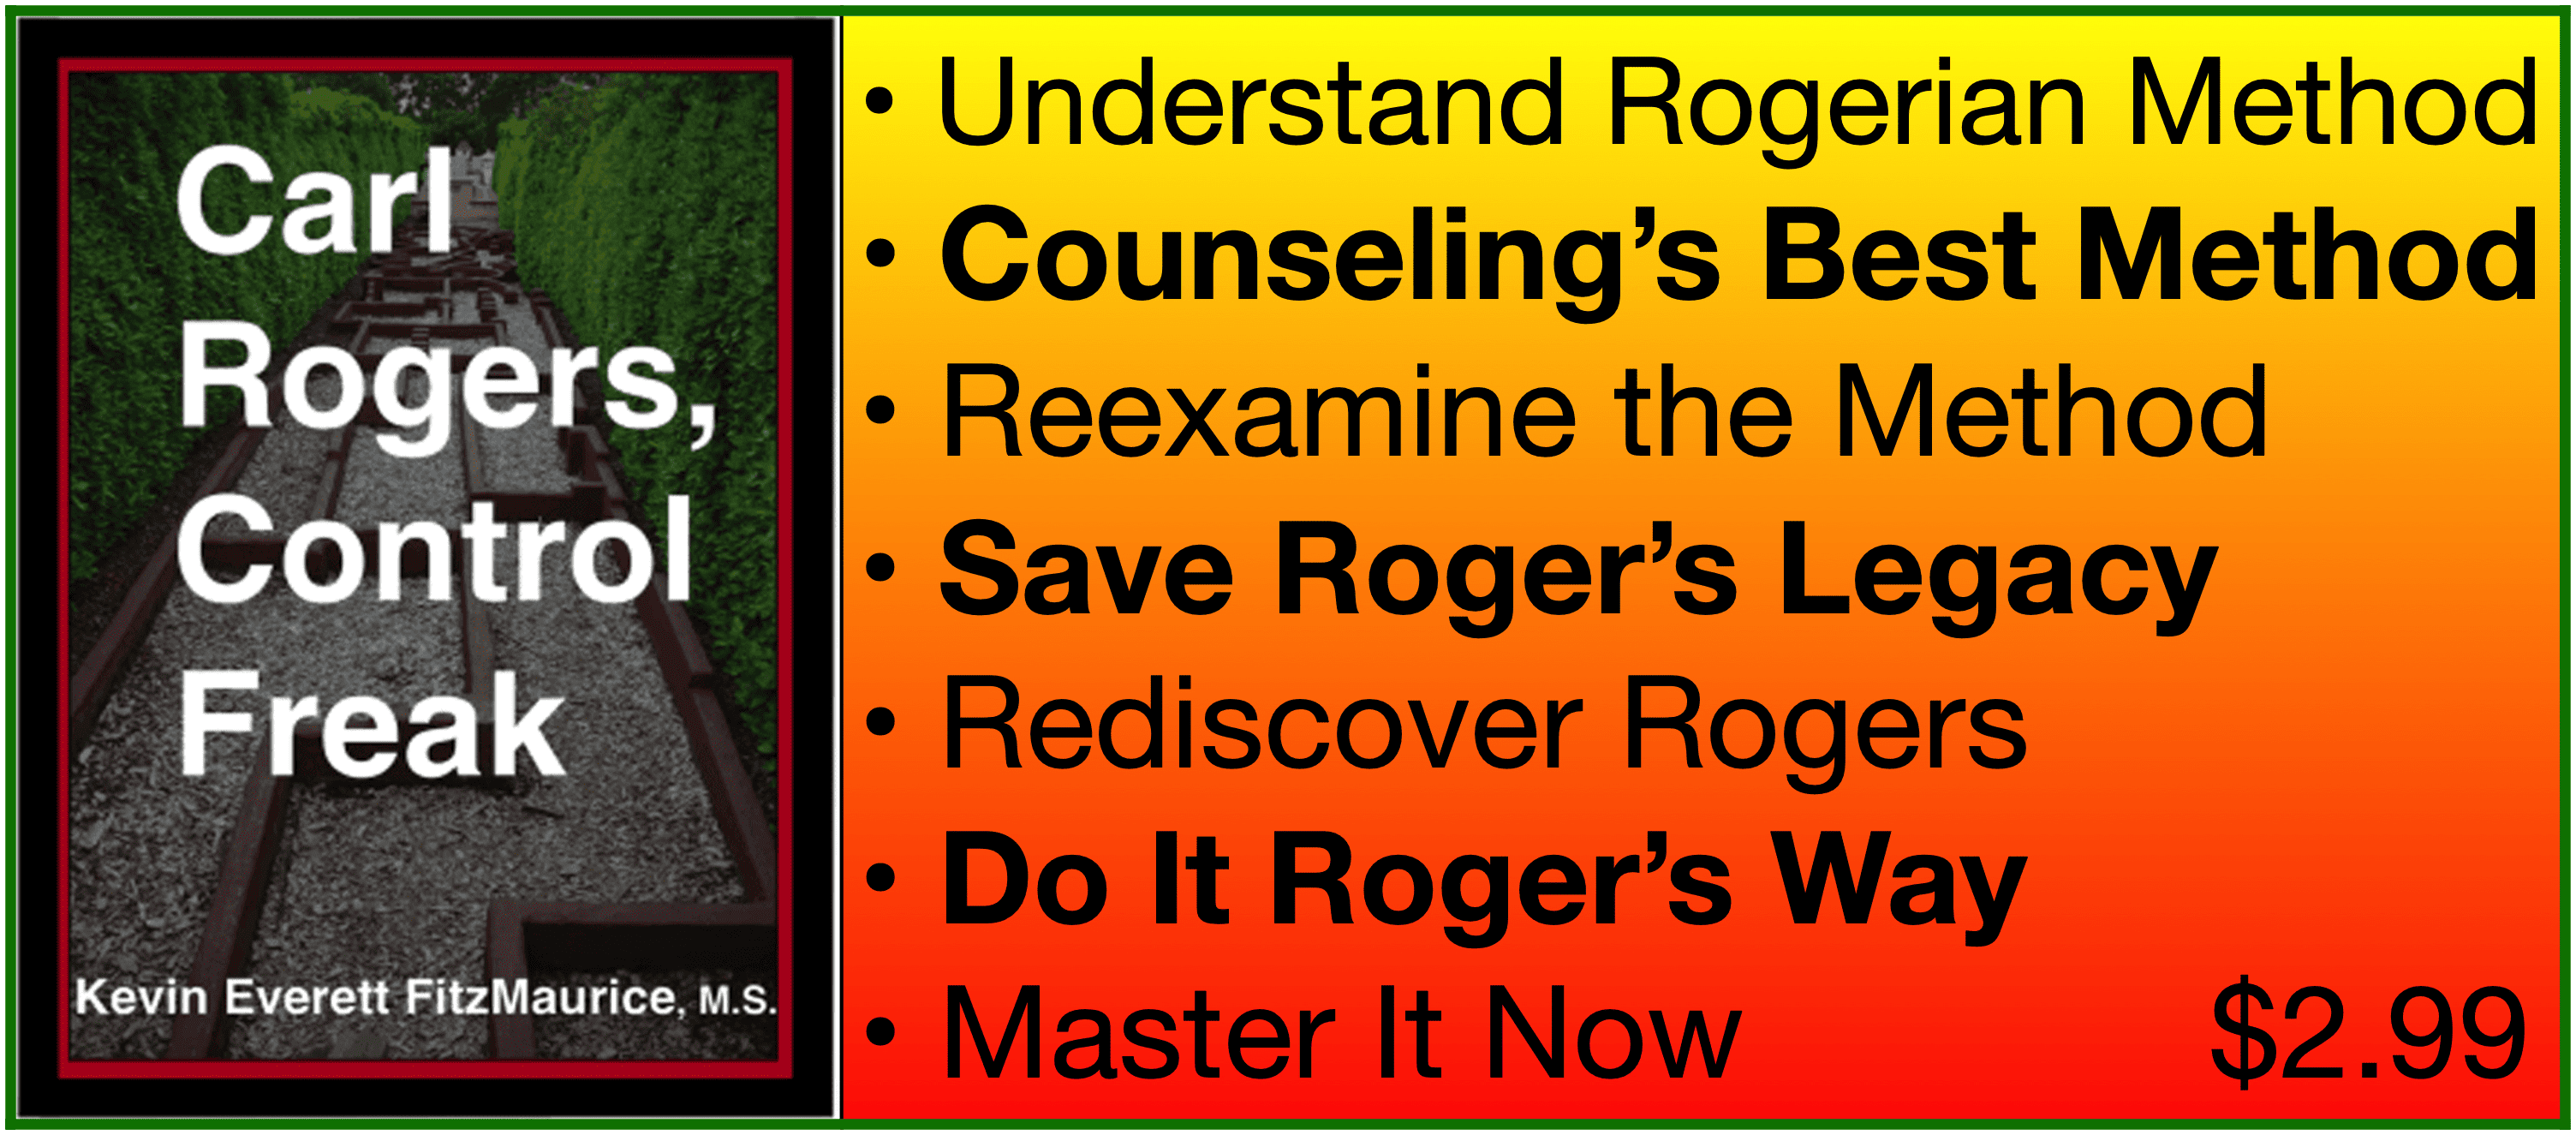 Carl Rogers, Control Freak promoting his method